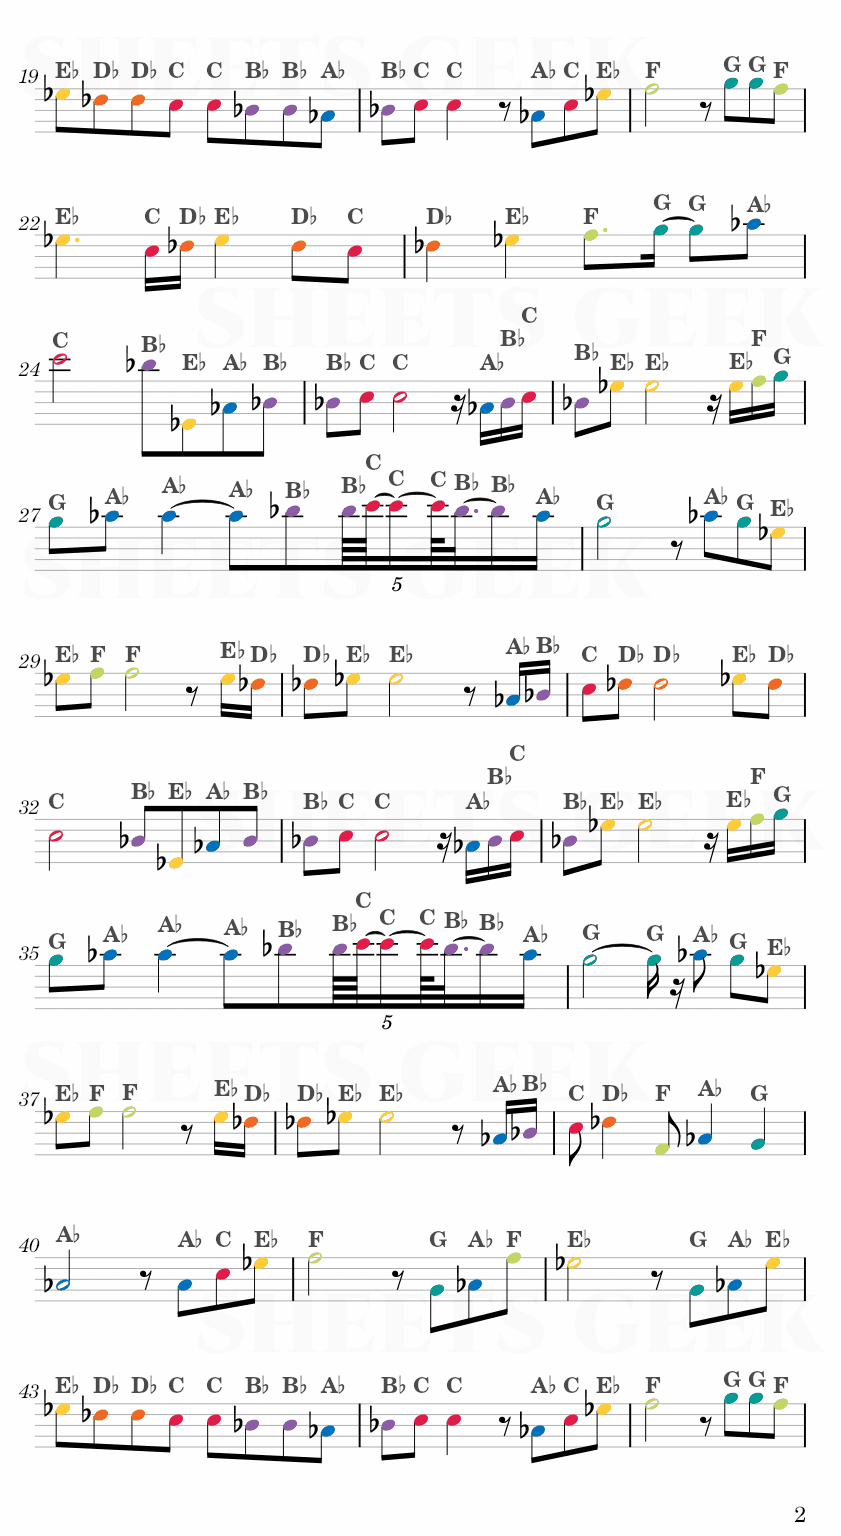 Kiss The Rain - Yiruma Easy Sheets Music Free for piano, keyboard, flute, violin, sax, celllo 2